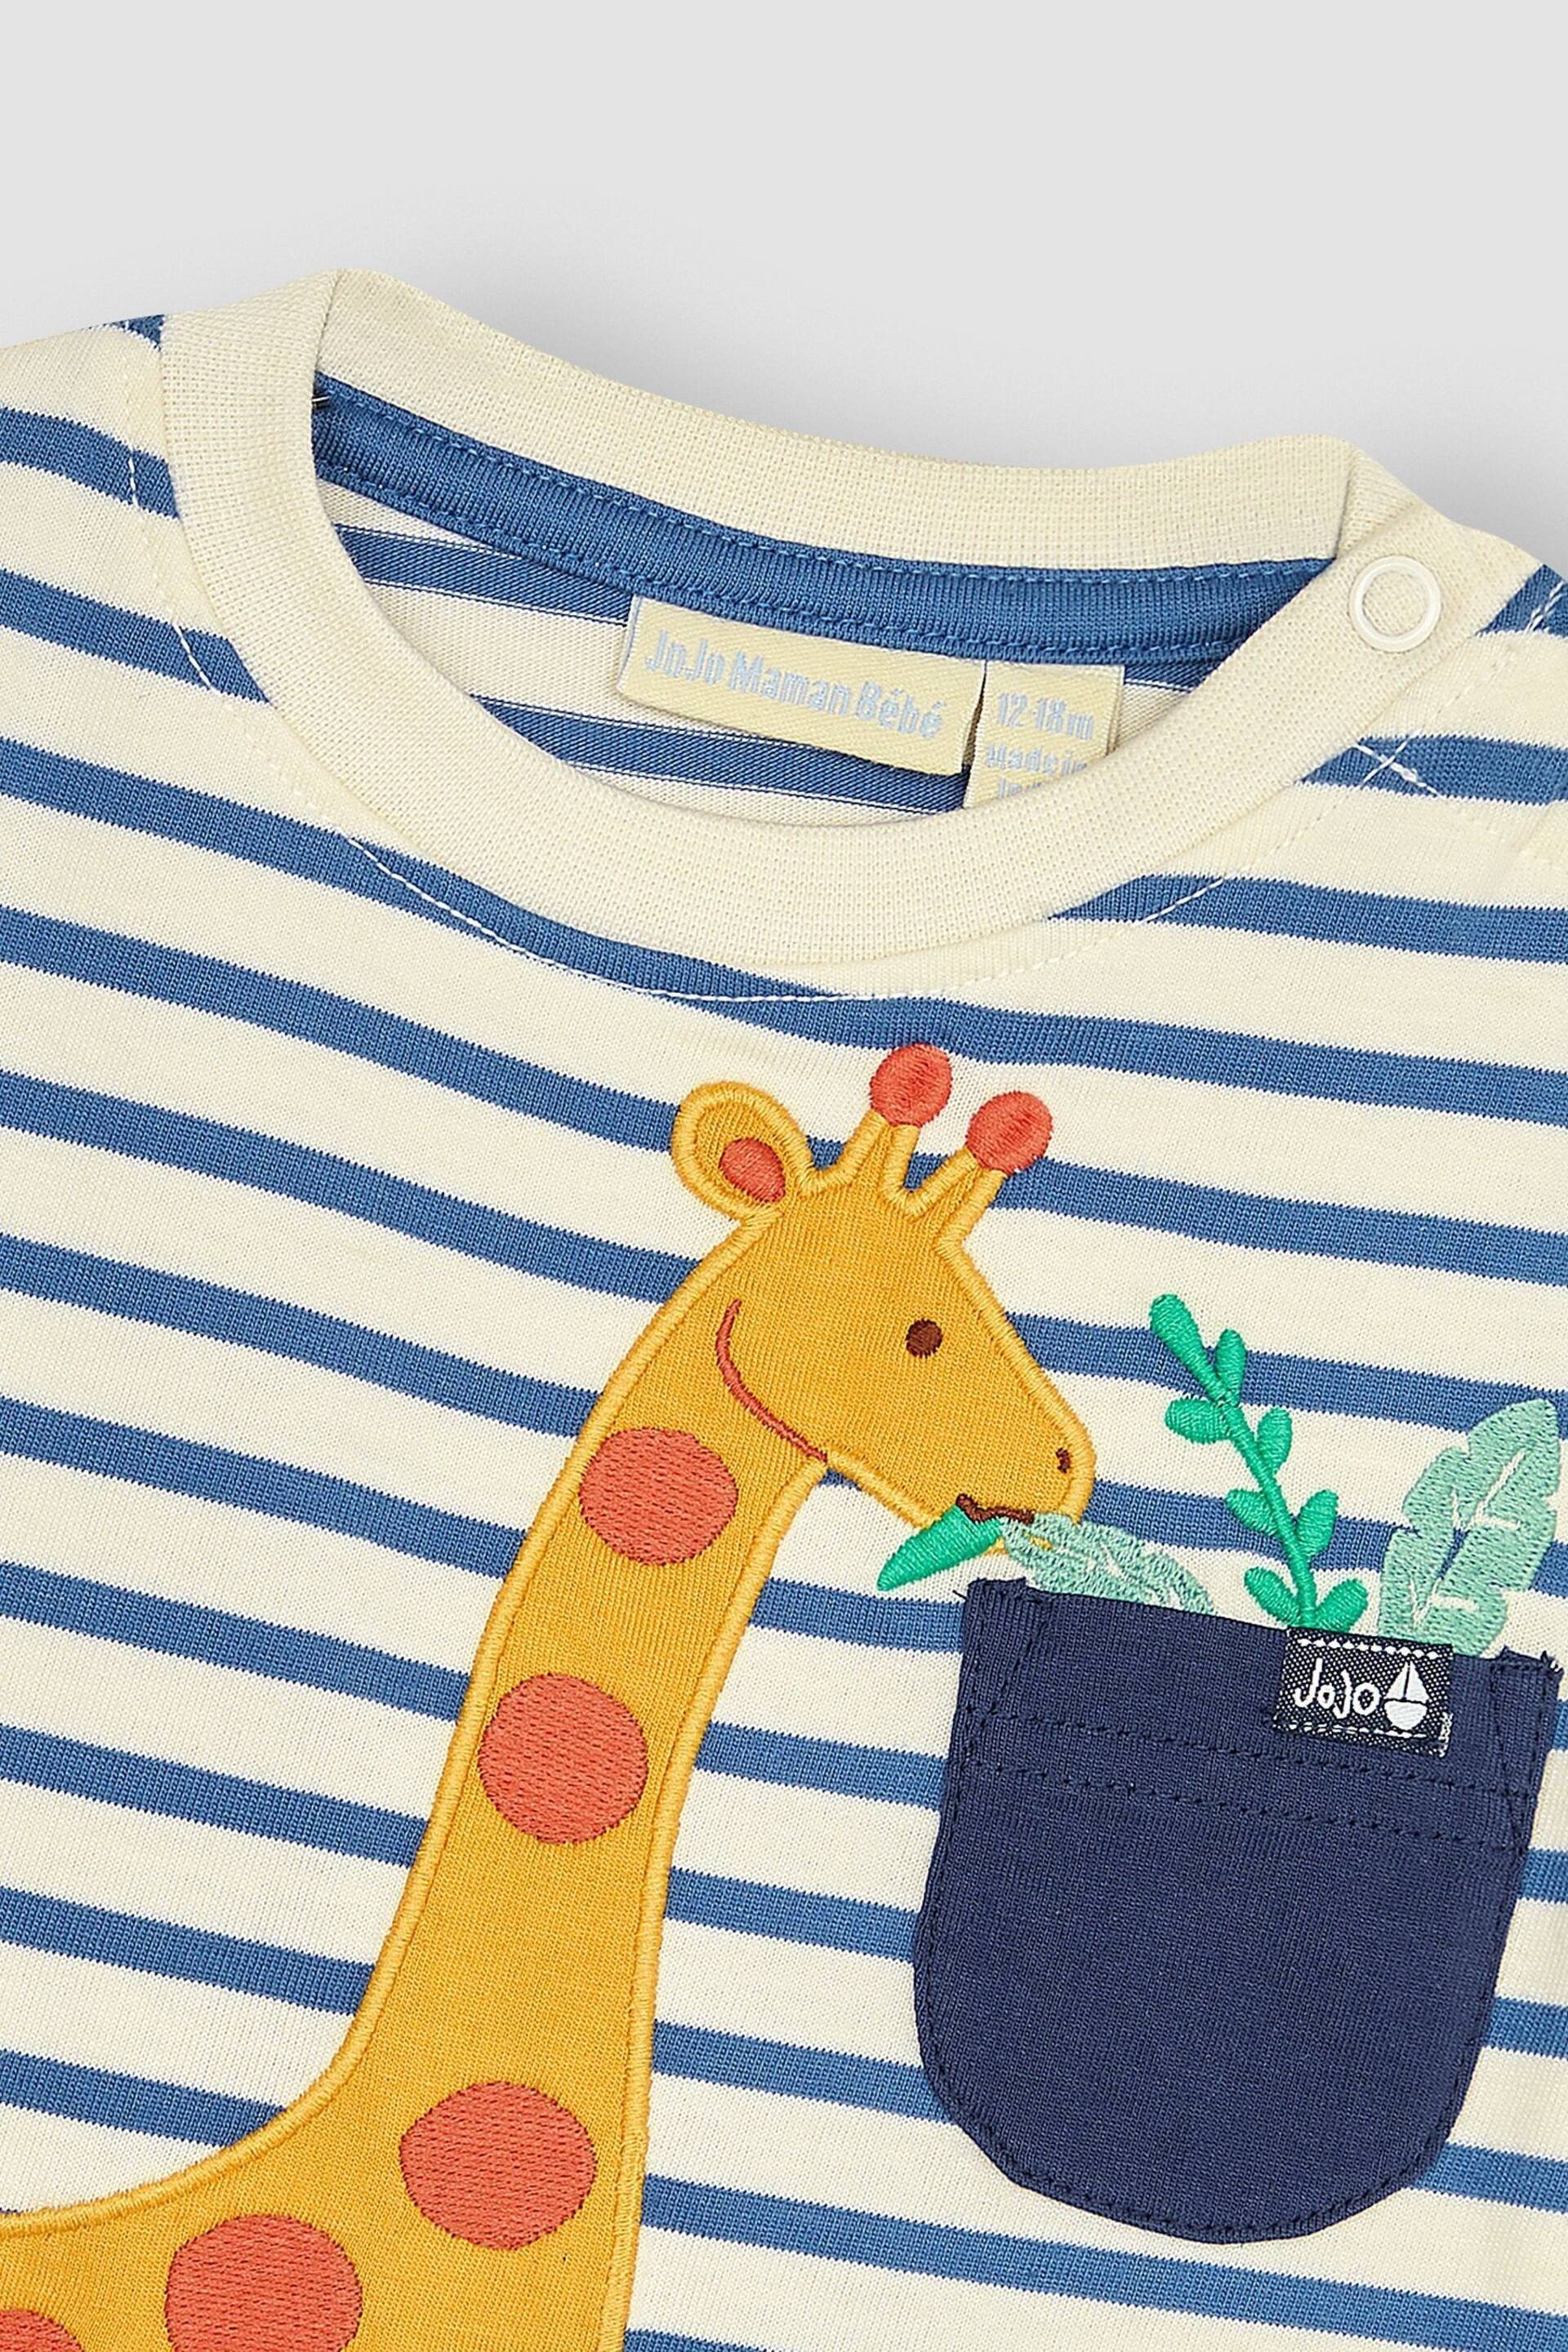 JoJo Maman Bébé Ecru Navy Stripe Giraffe Appliqué T-Shirt and Shorts Set - Image 4 of 4